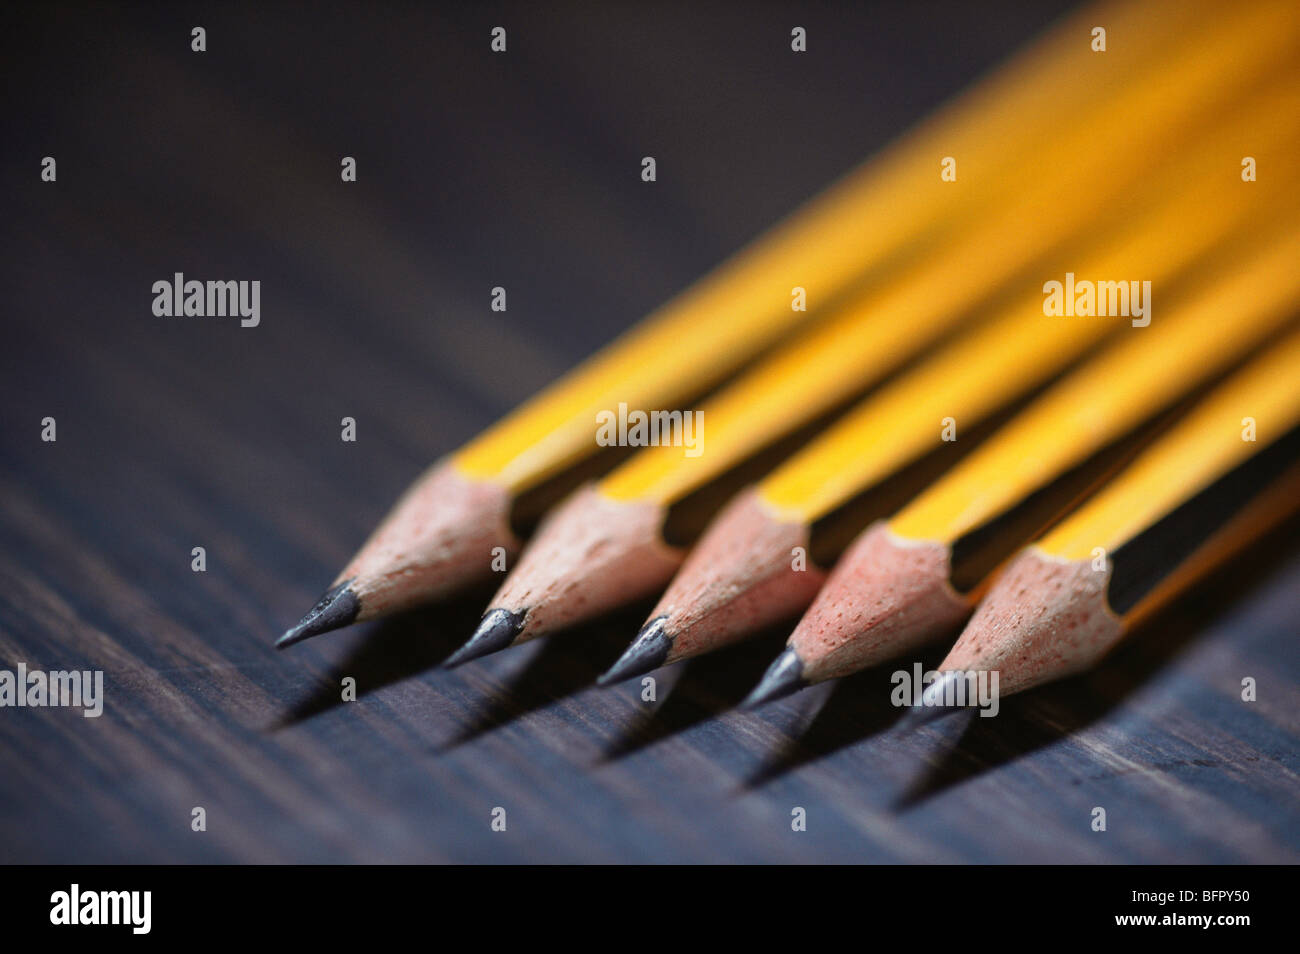 Five pencils, yellow pencils, sharpened pencils on black baackground Stock Photo